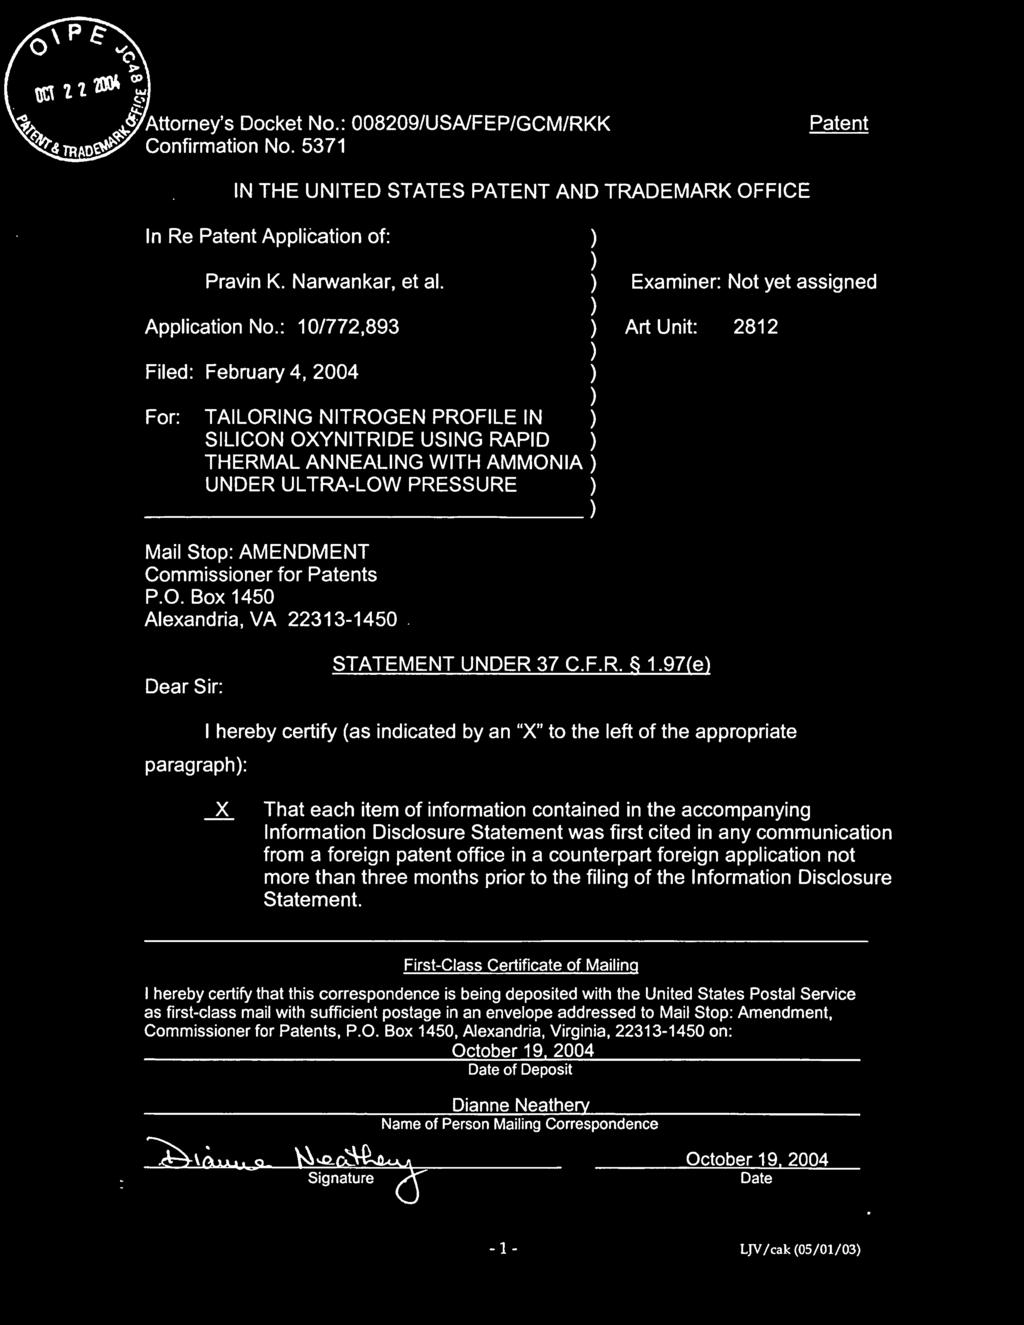 PRESSURE Mail Stop: AMENDMENT Commissioner for Patents P.O. Box 14